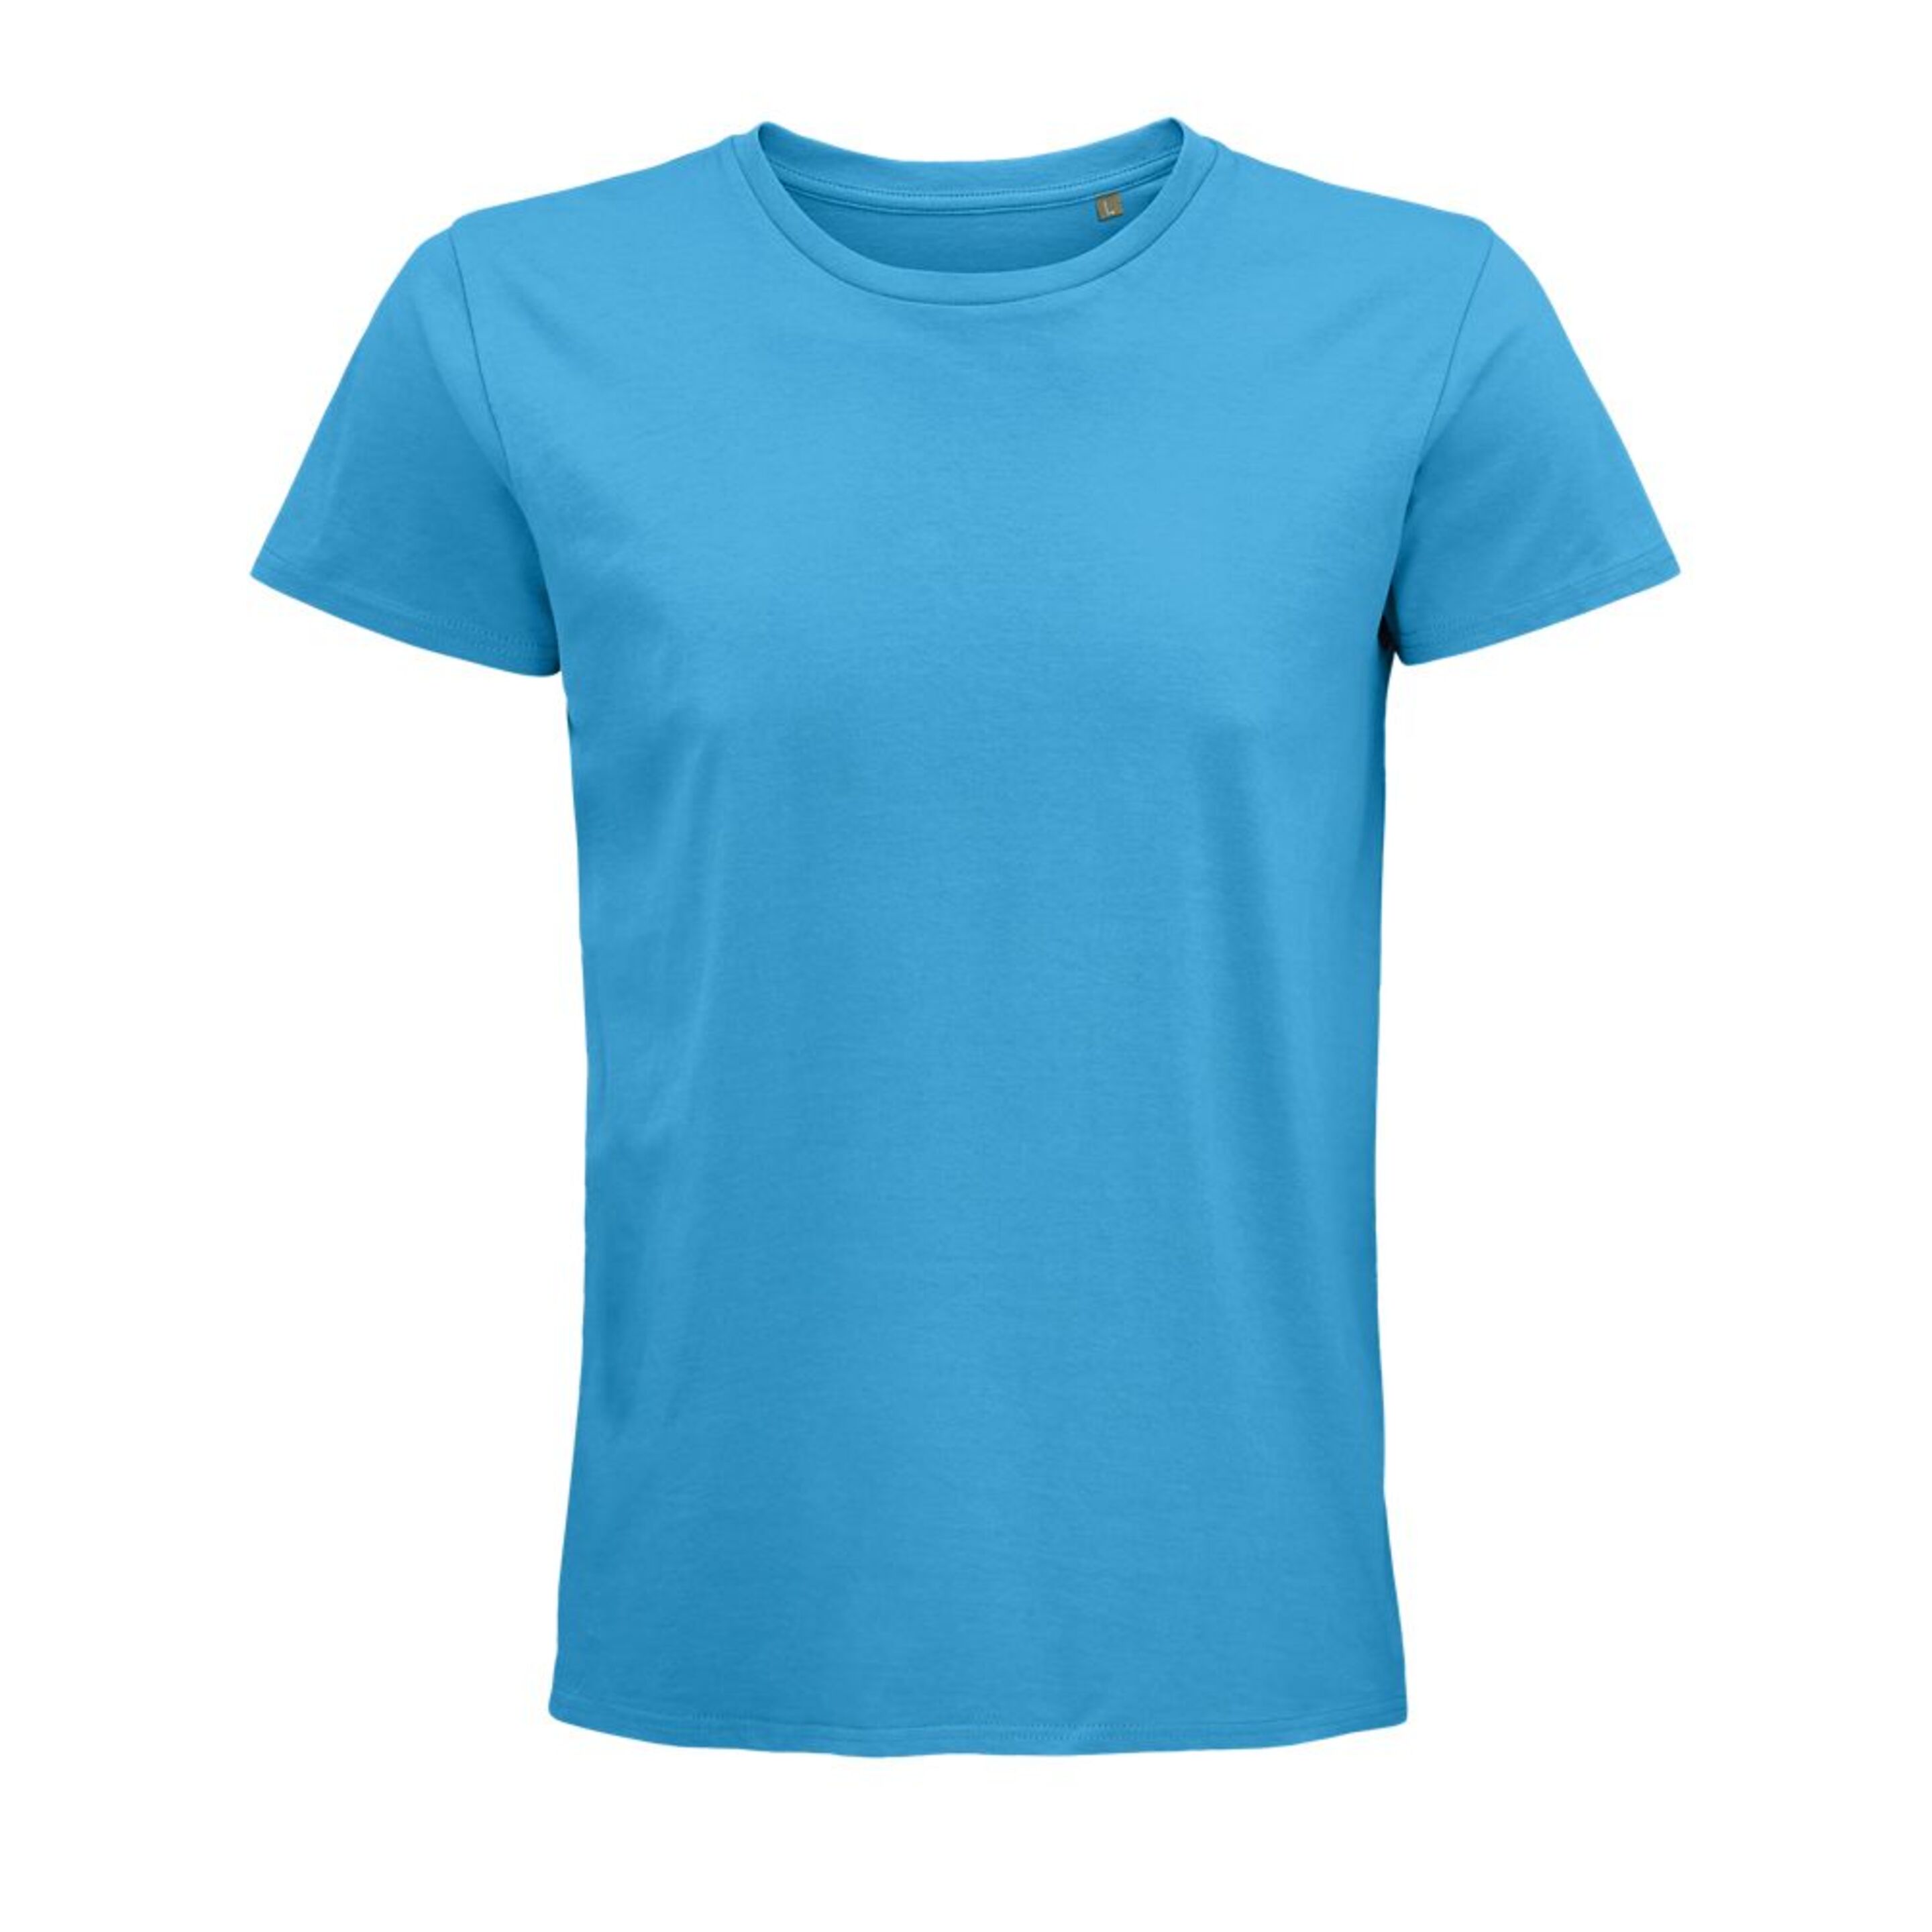 Camiseta Marnaula Pionner - Azul Cielo - Modelo Adulto  MKP